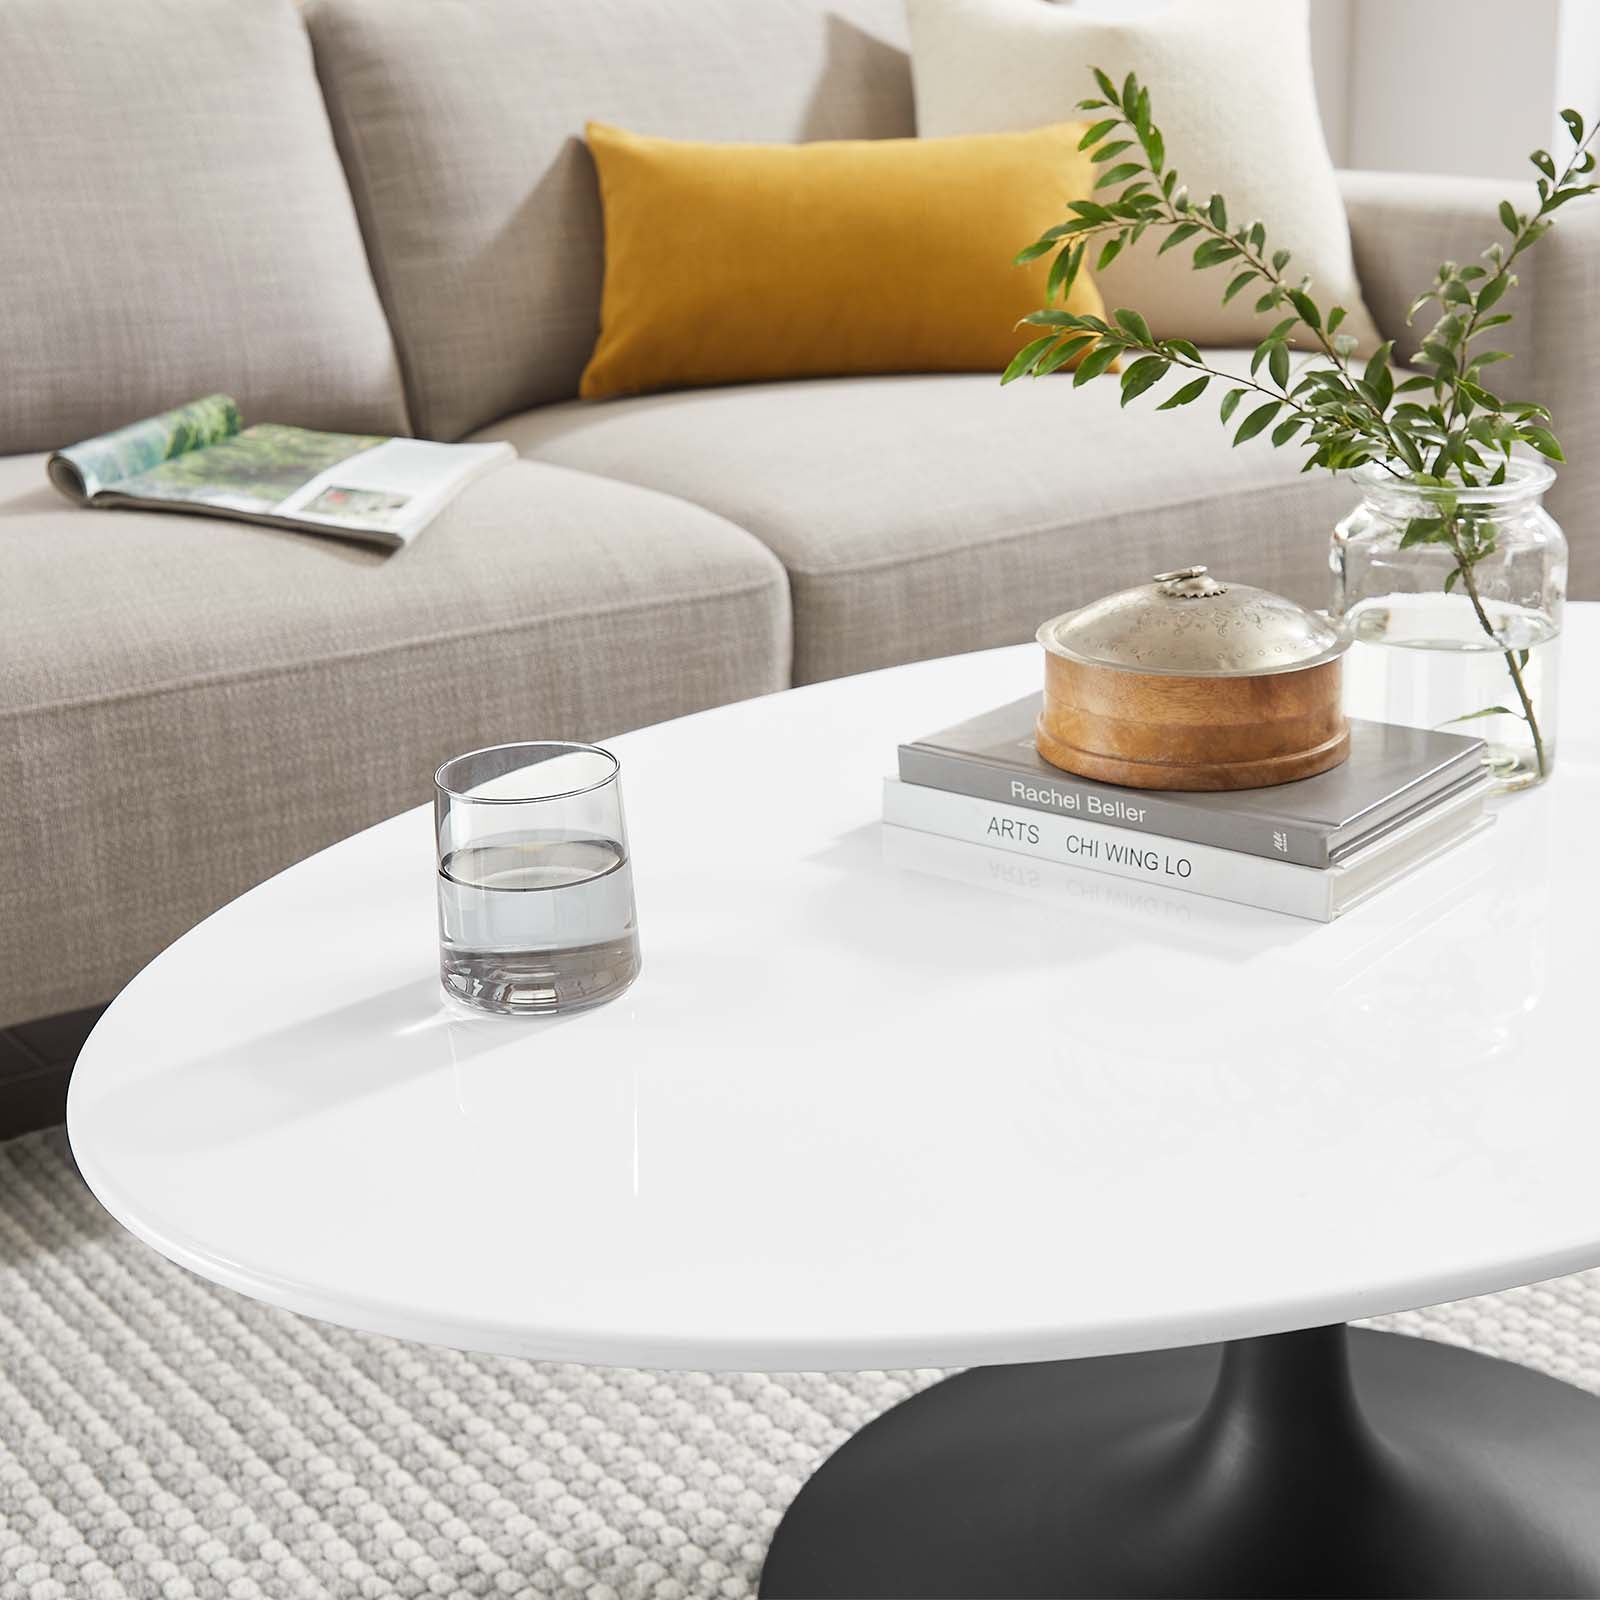 Lippa 42" Oval-Shaped Wood Coffee Table-Coffee Table-Modway-Wall2Wall Furnishings